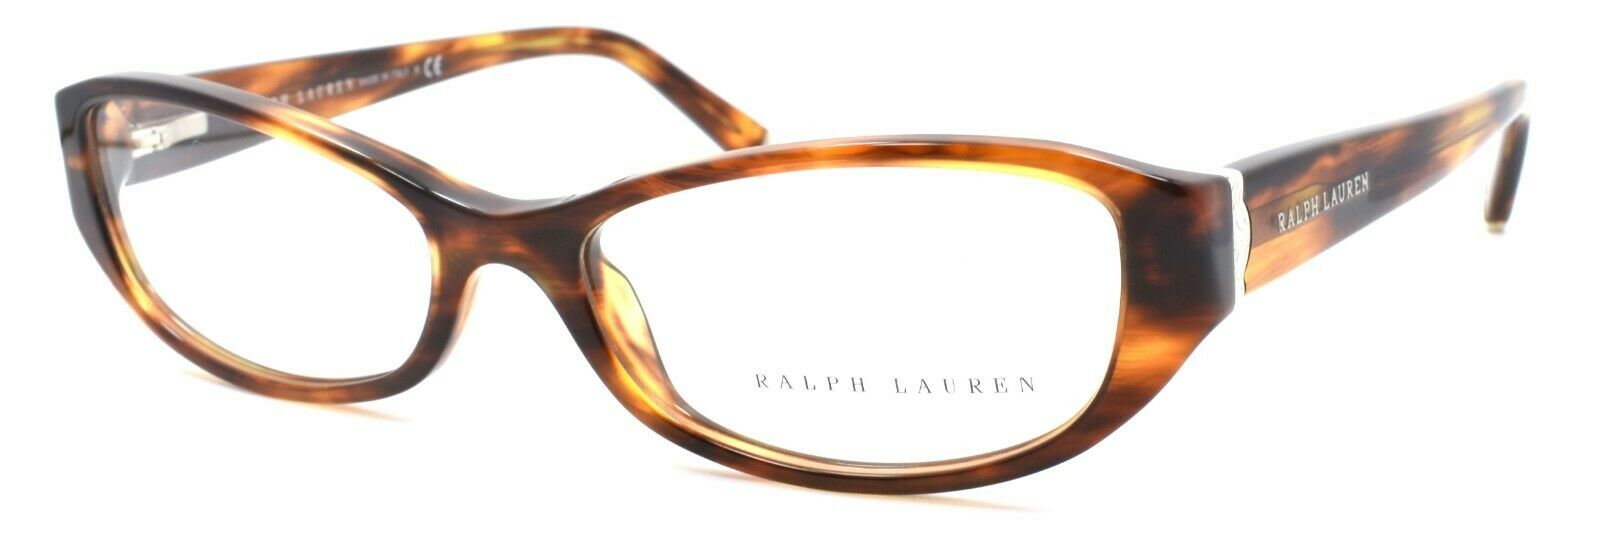 1-Ralph Lauren RL 6108 5007 Women's Eyeglasses Frames 52-16-140 Brown Tortoise-8053672145625-IKSpecs